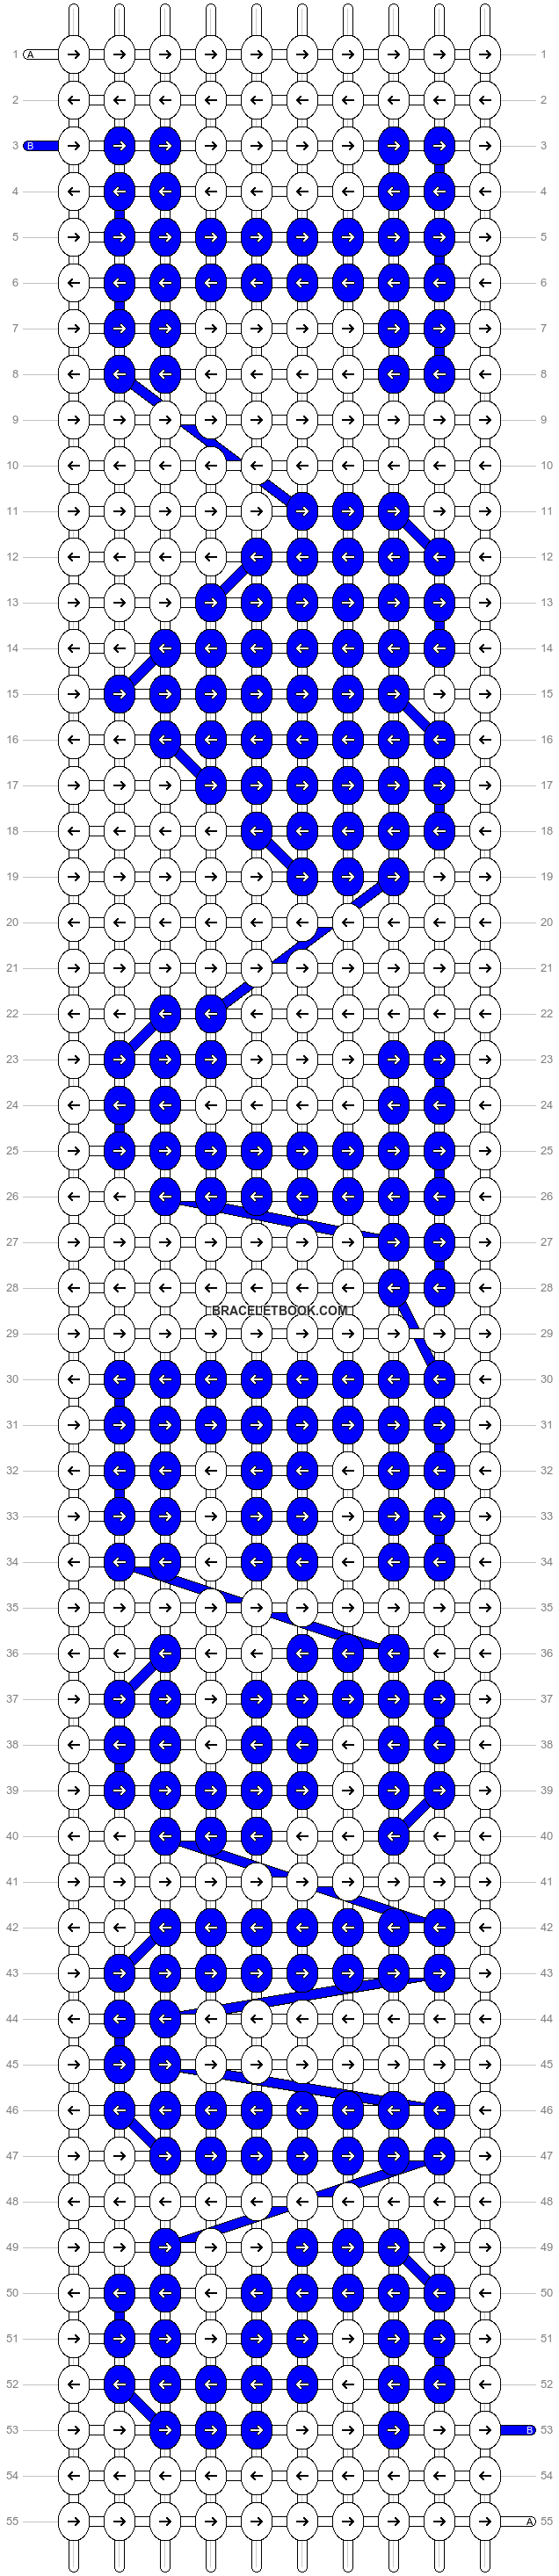 Alpha pattern #19594 variation #27359 pattern